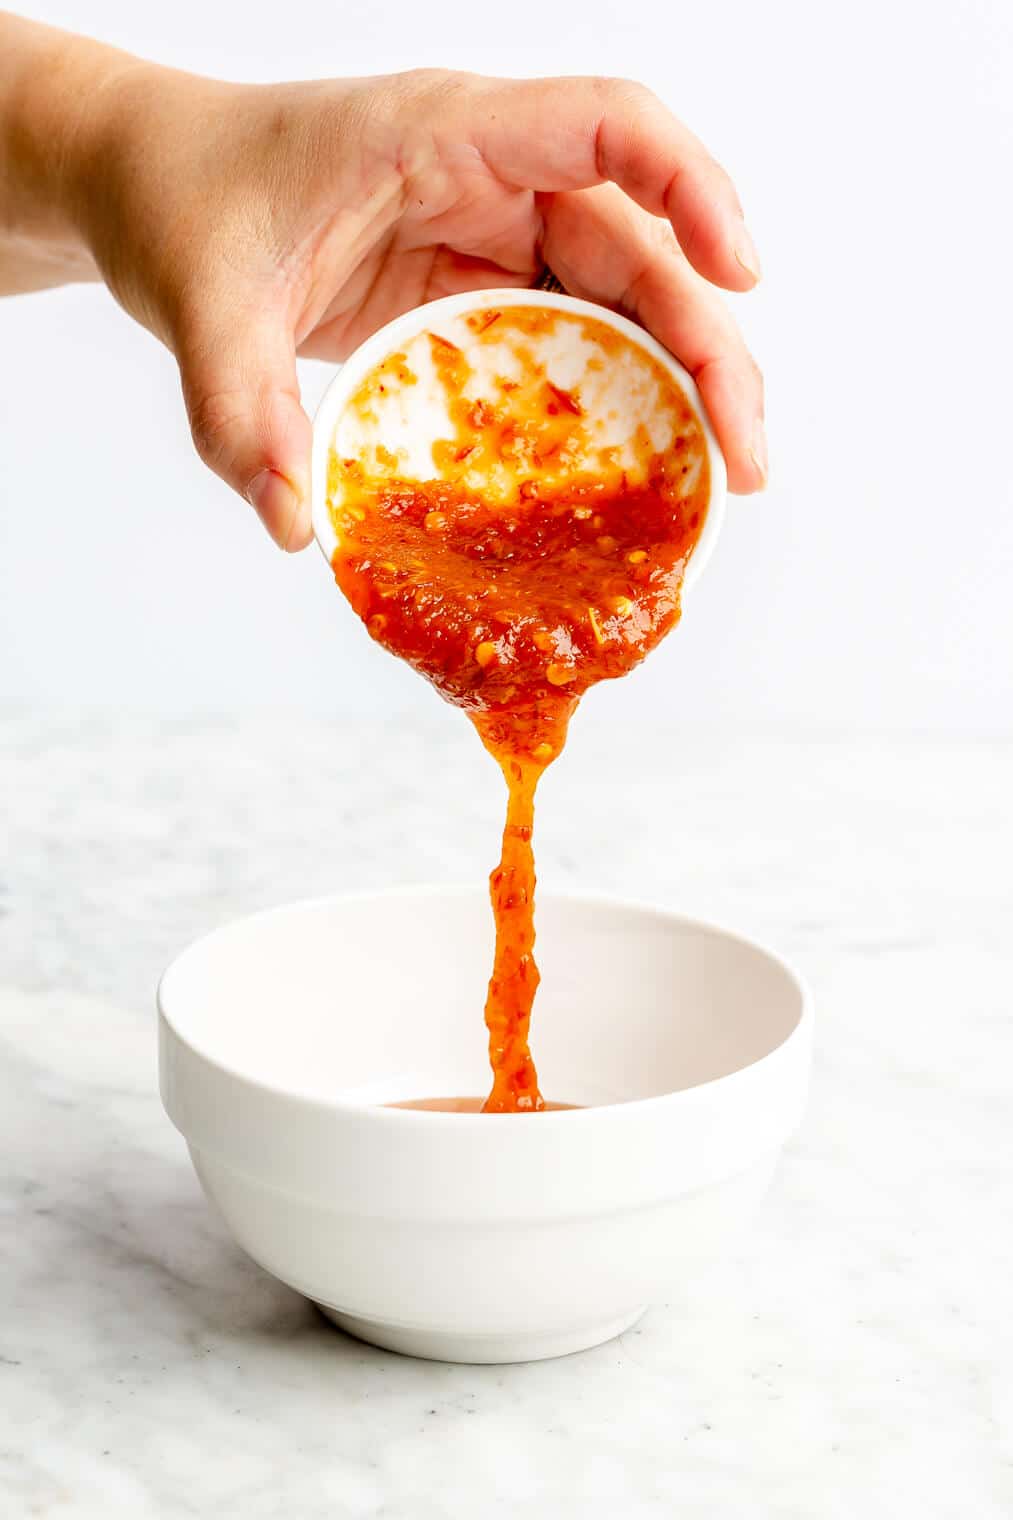 A person pouring chili garlic sauce into a small white bowl.